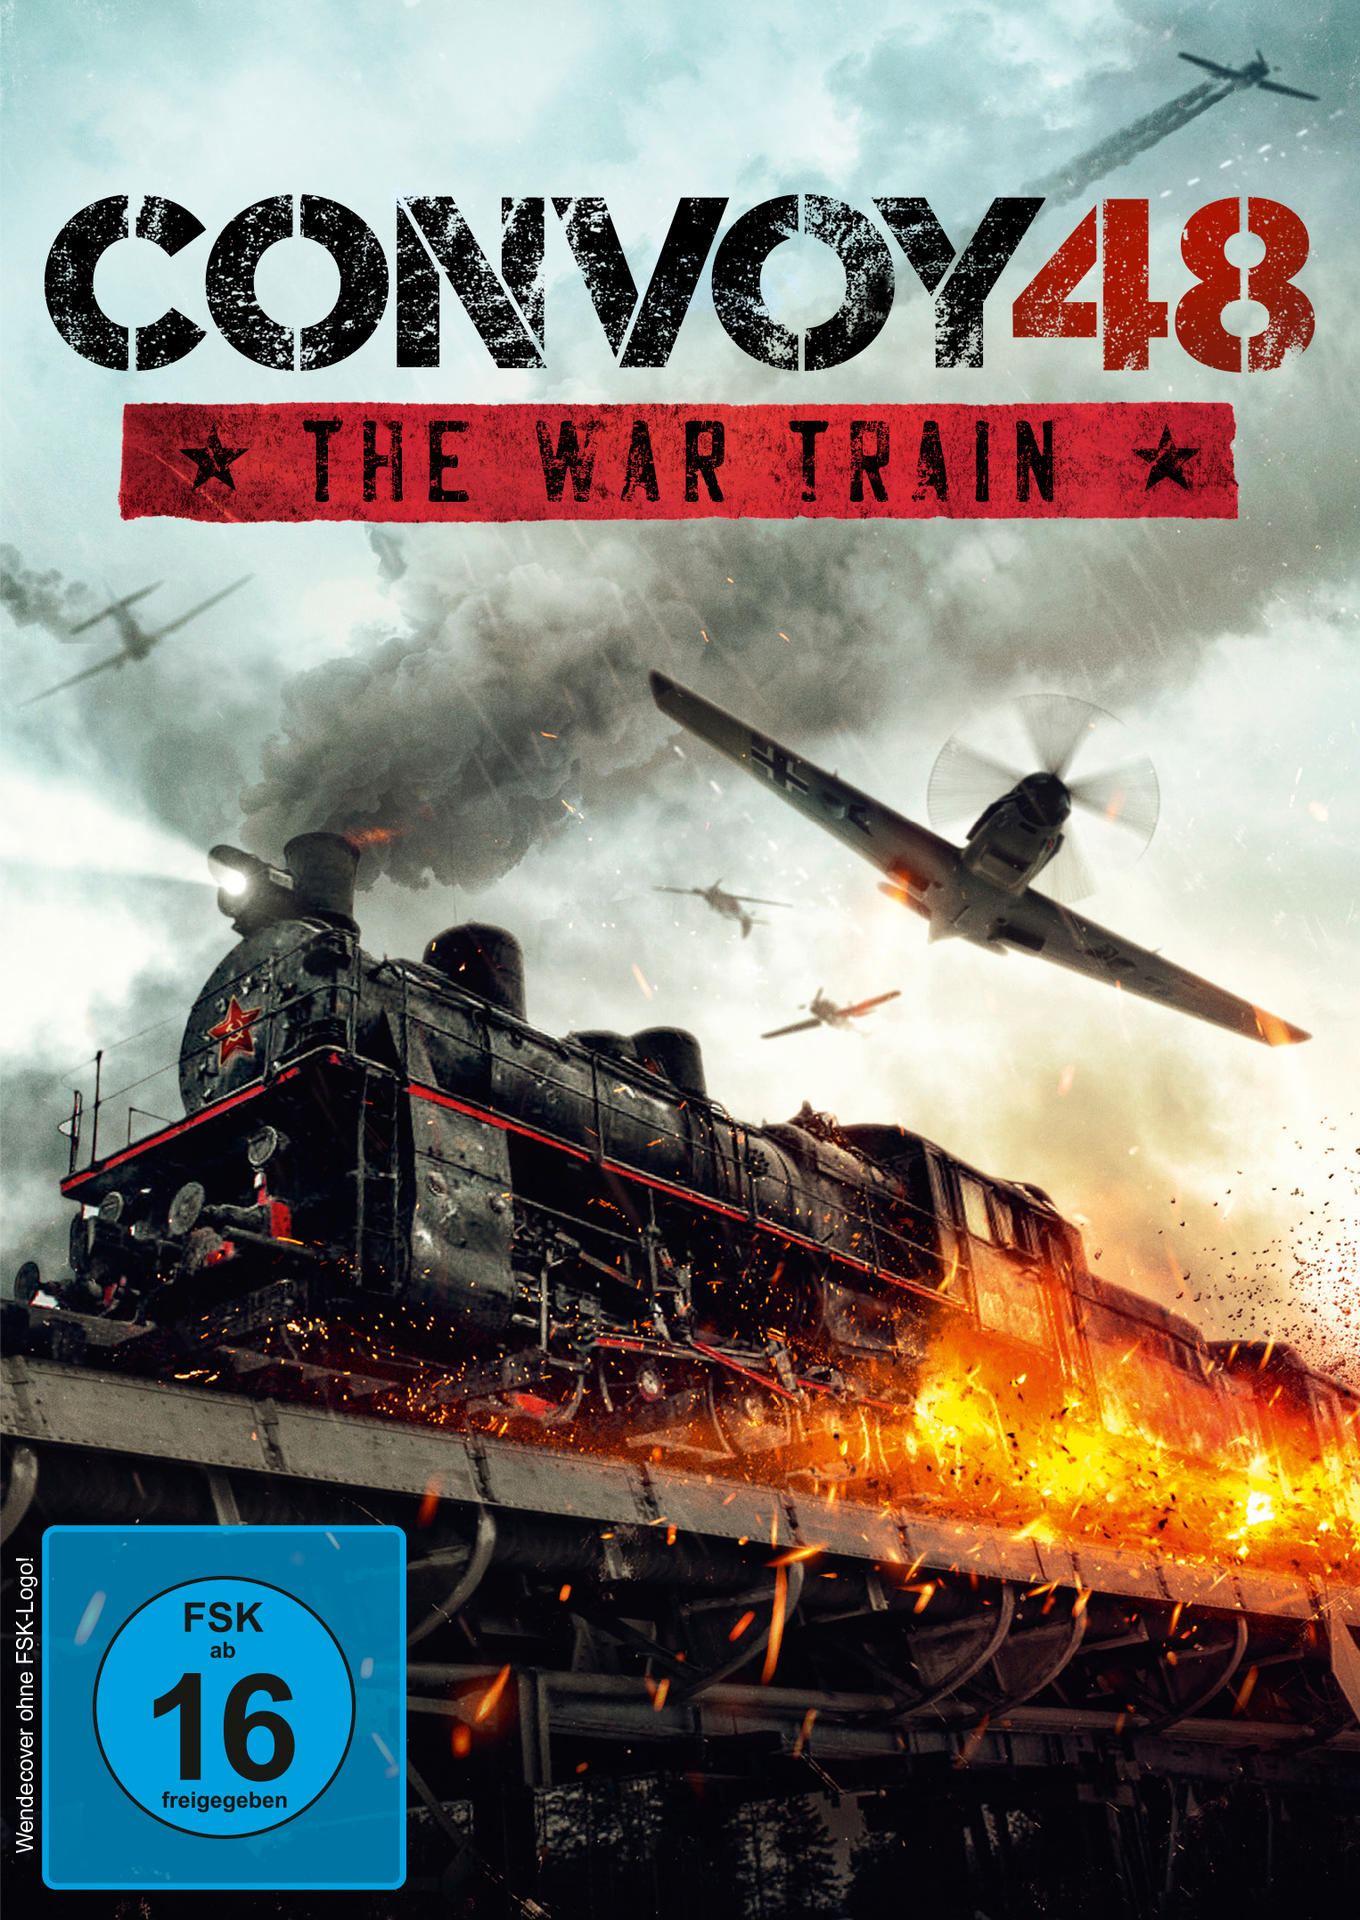 Convoy 48 War Train The - DVD